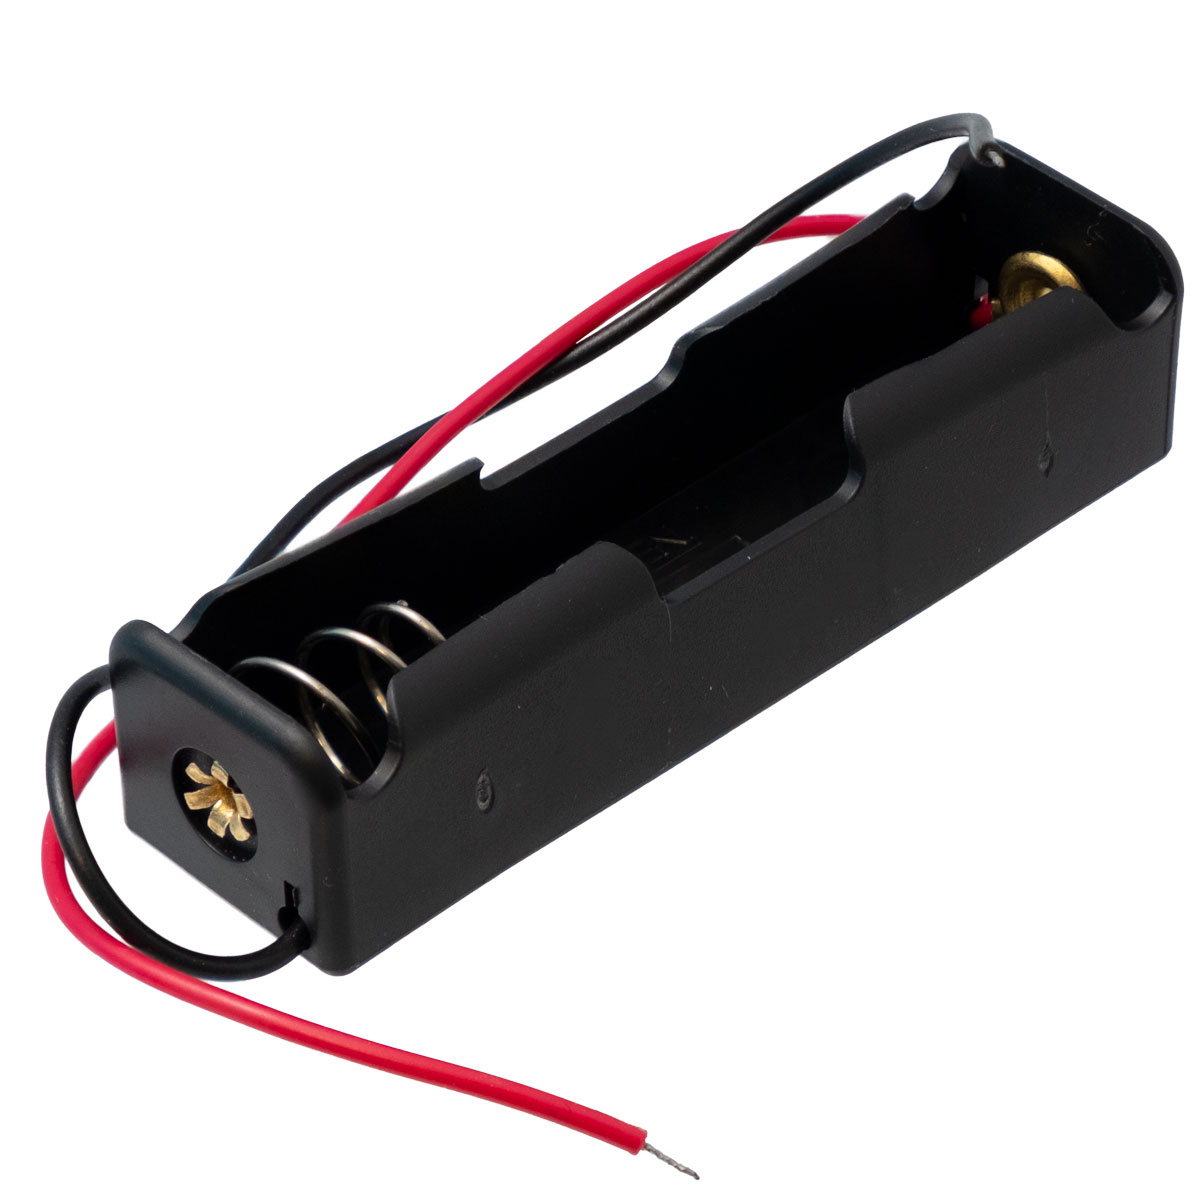 1 unit battery holder for 18650 bateries